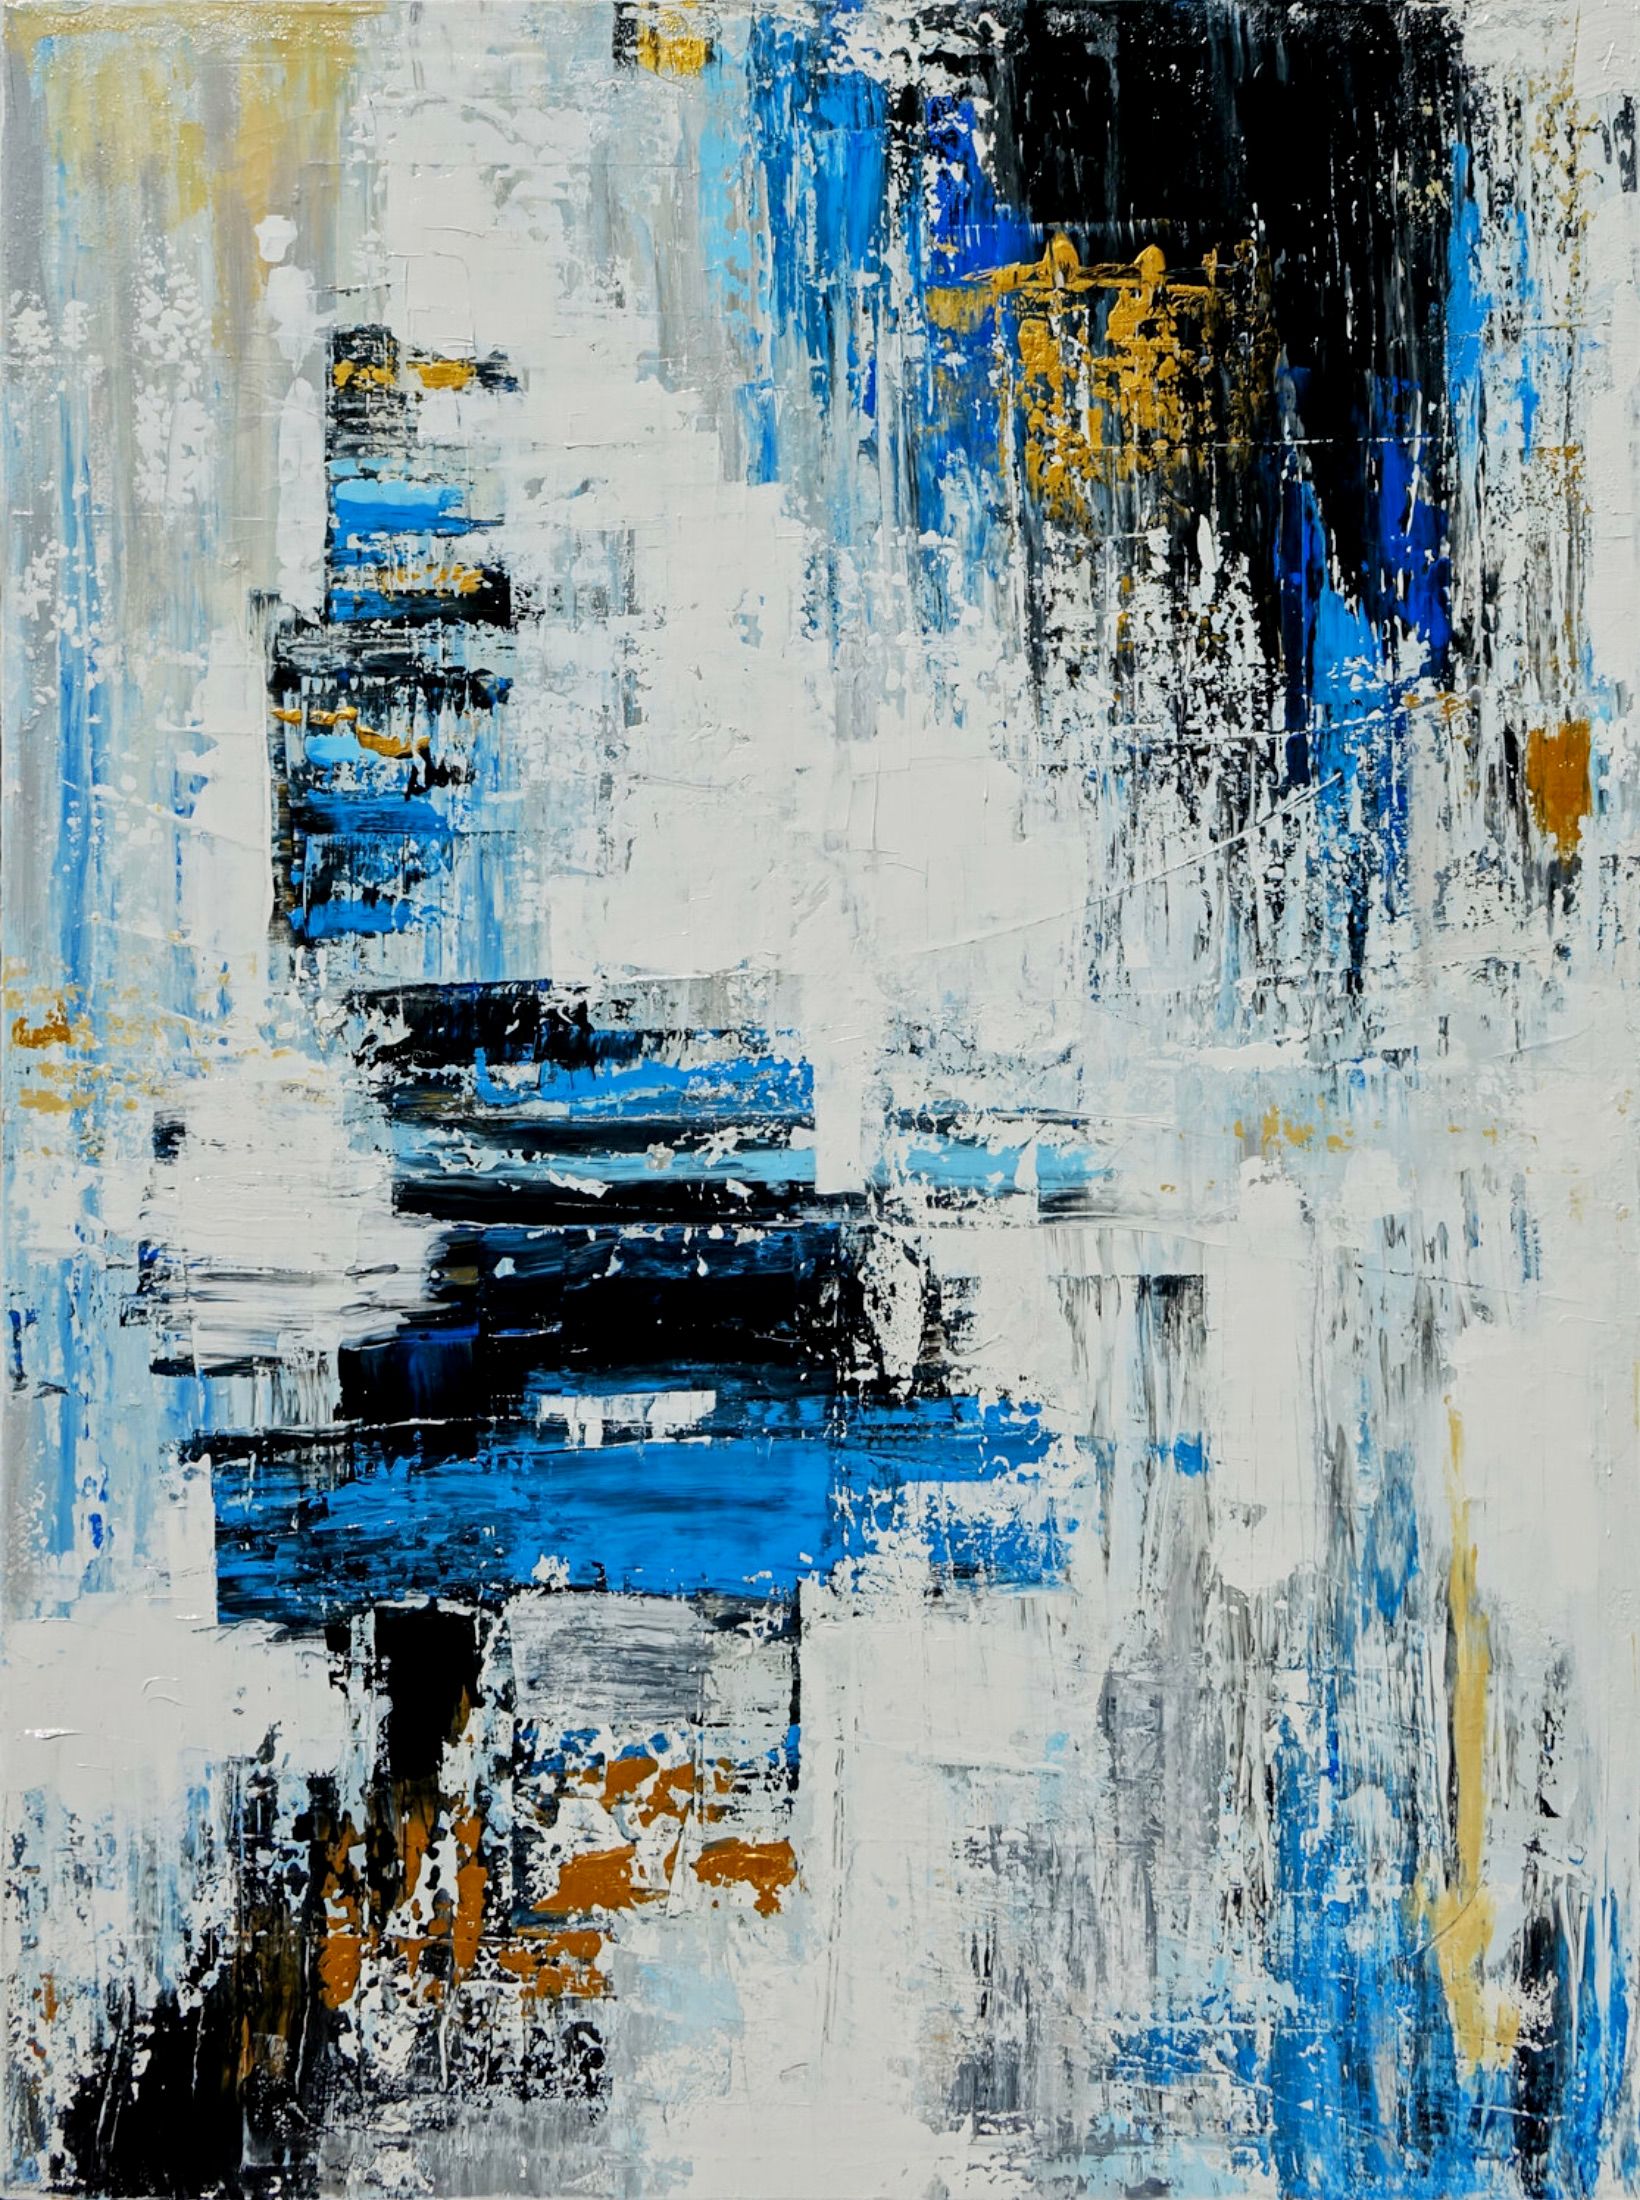 Wojtek Babski, "Blue Abstract", pittura astratta su tela